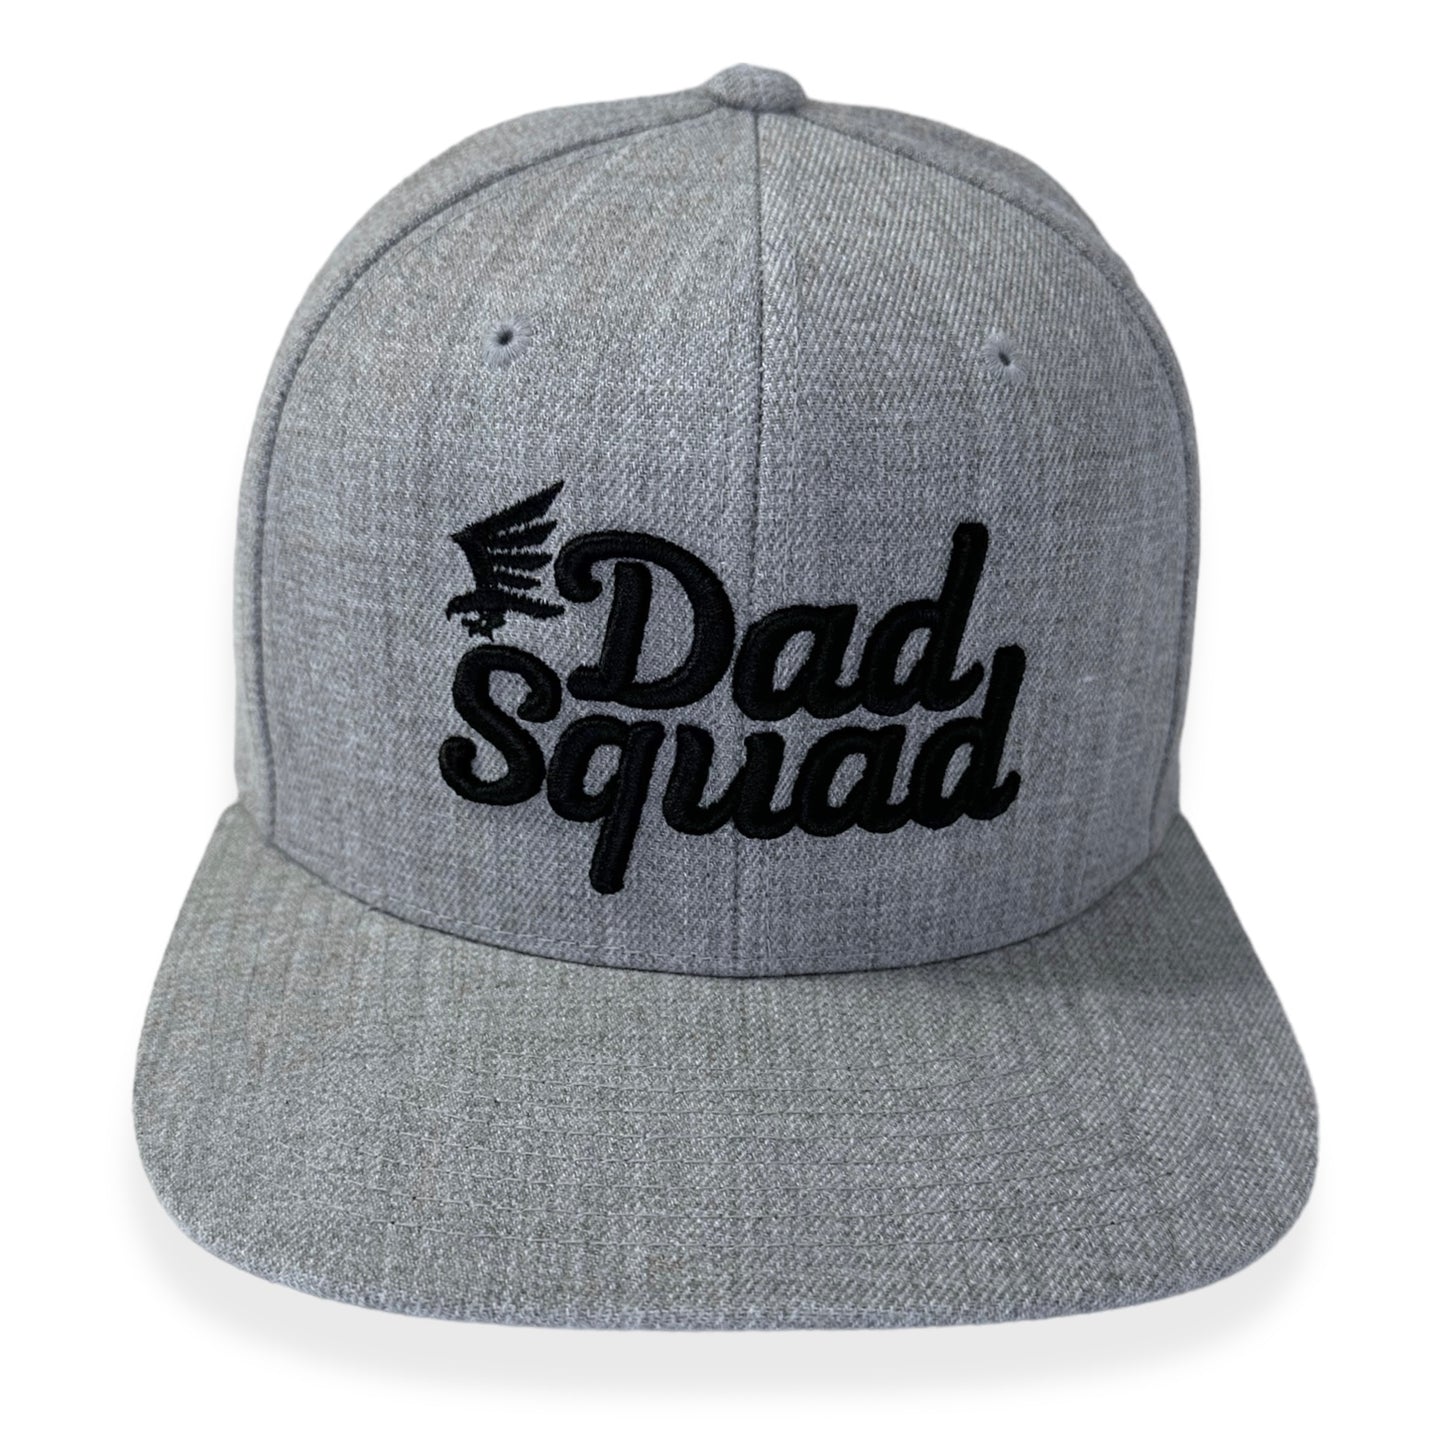 Dad Squad Flat Bill Cap - Heather Grey